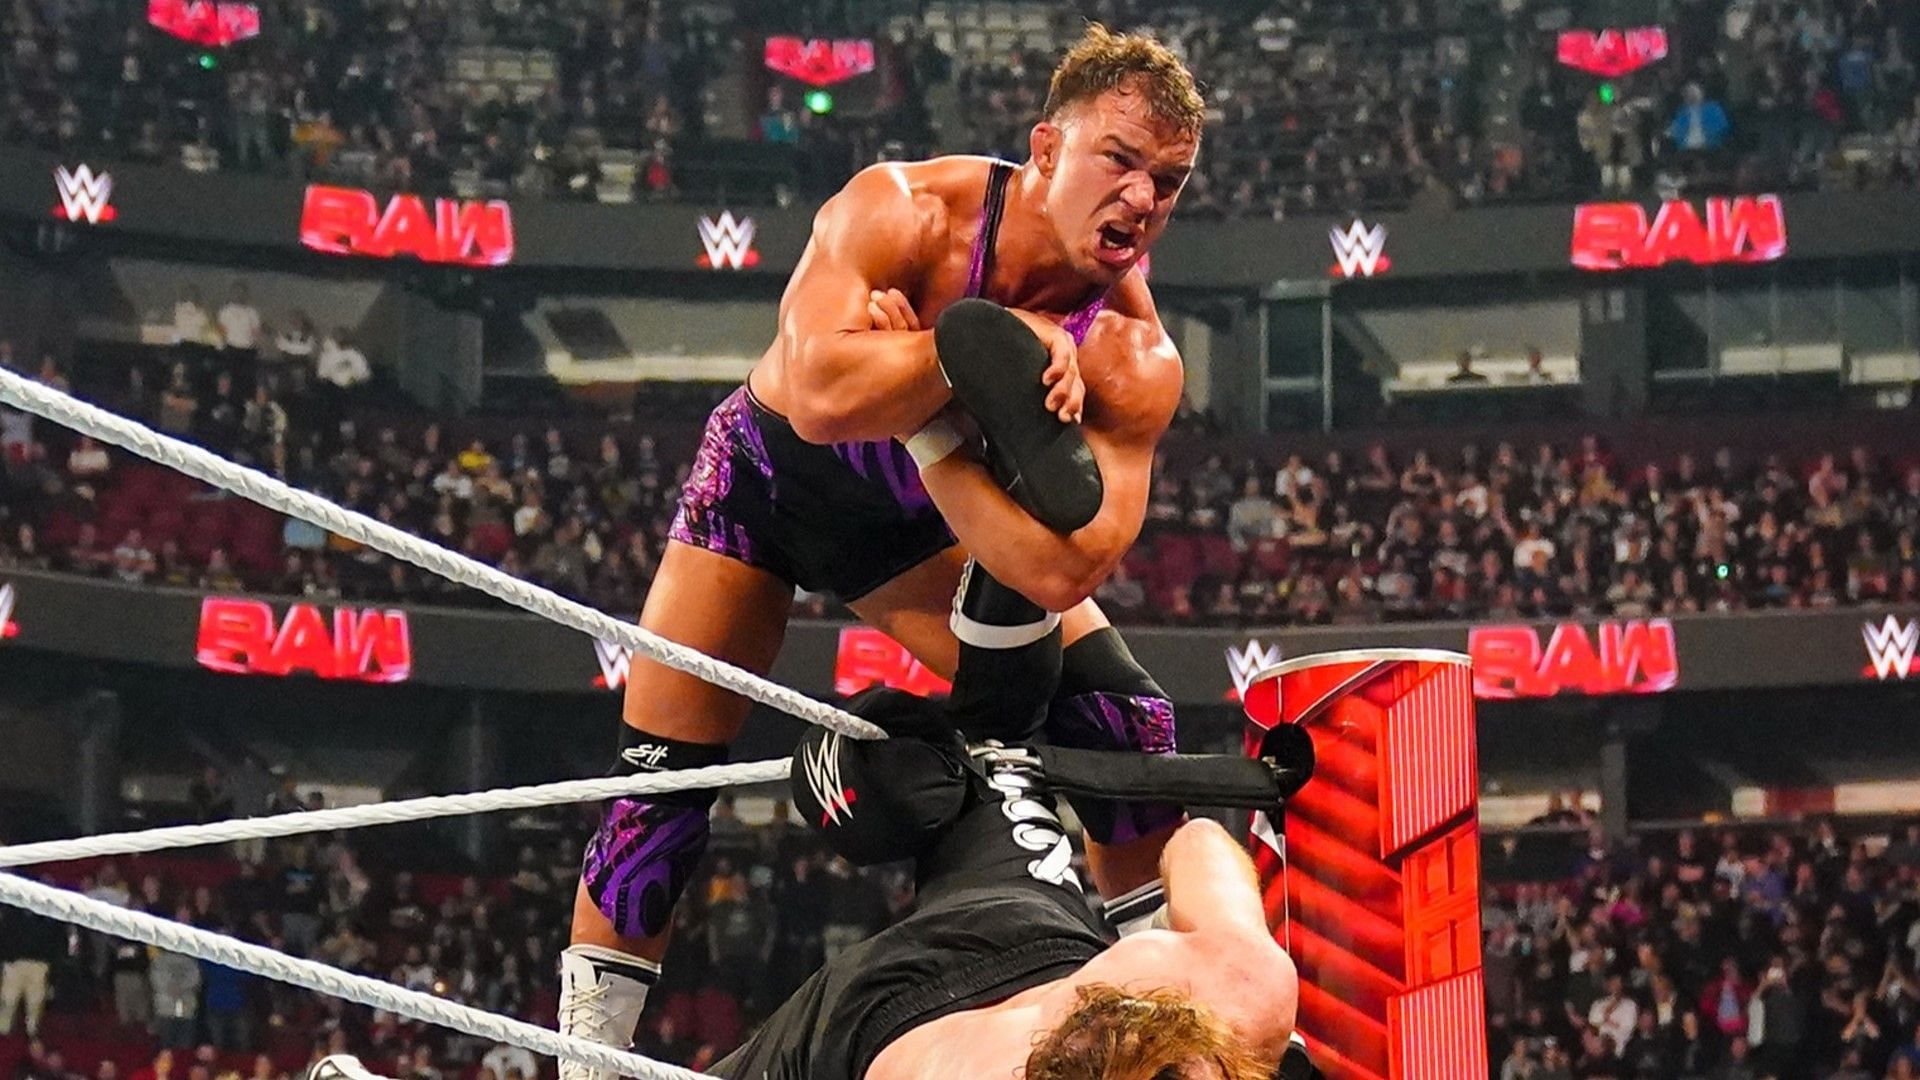 Chad Gable snaps on Sami Zayn during WWE RAW